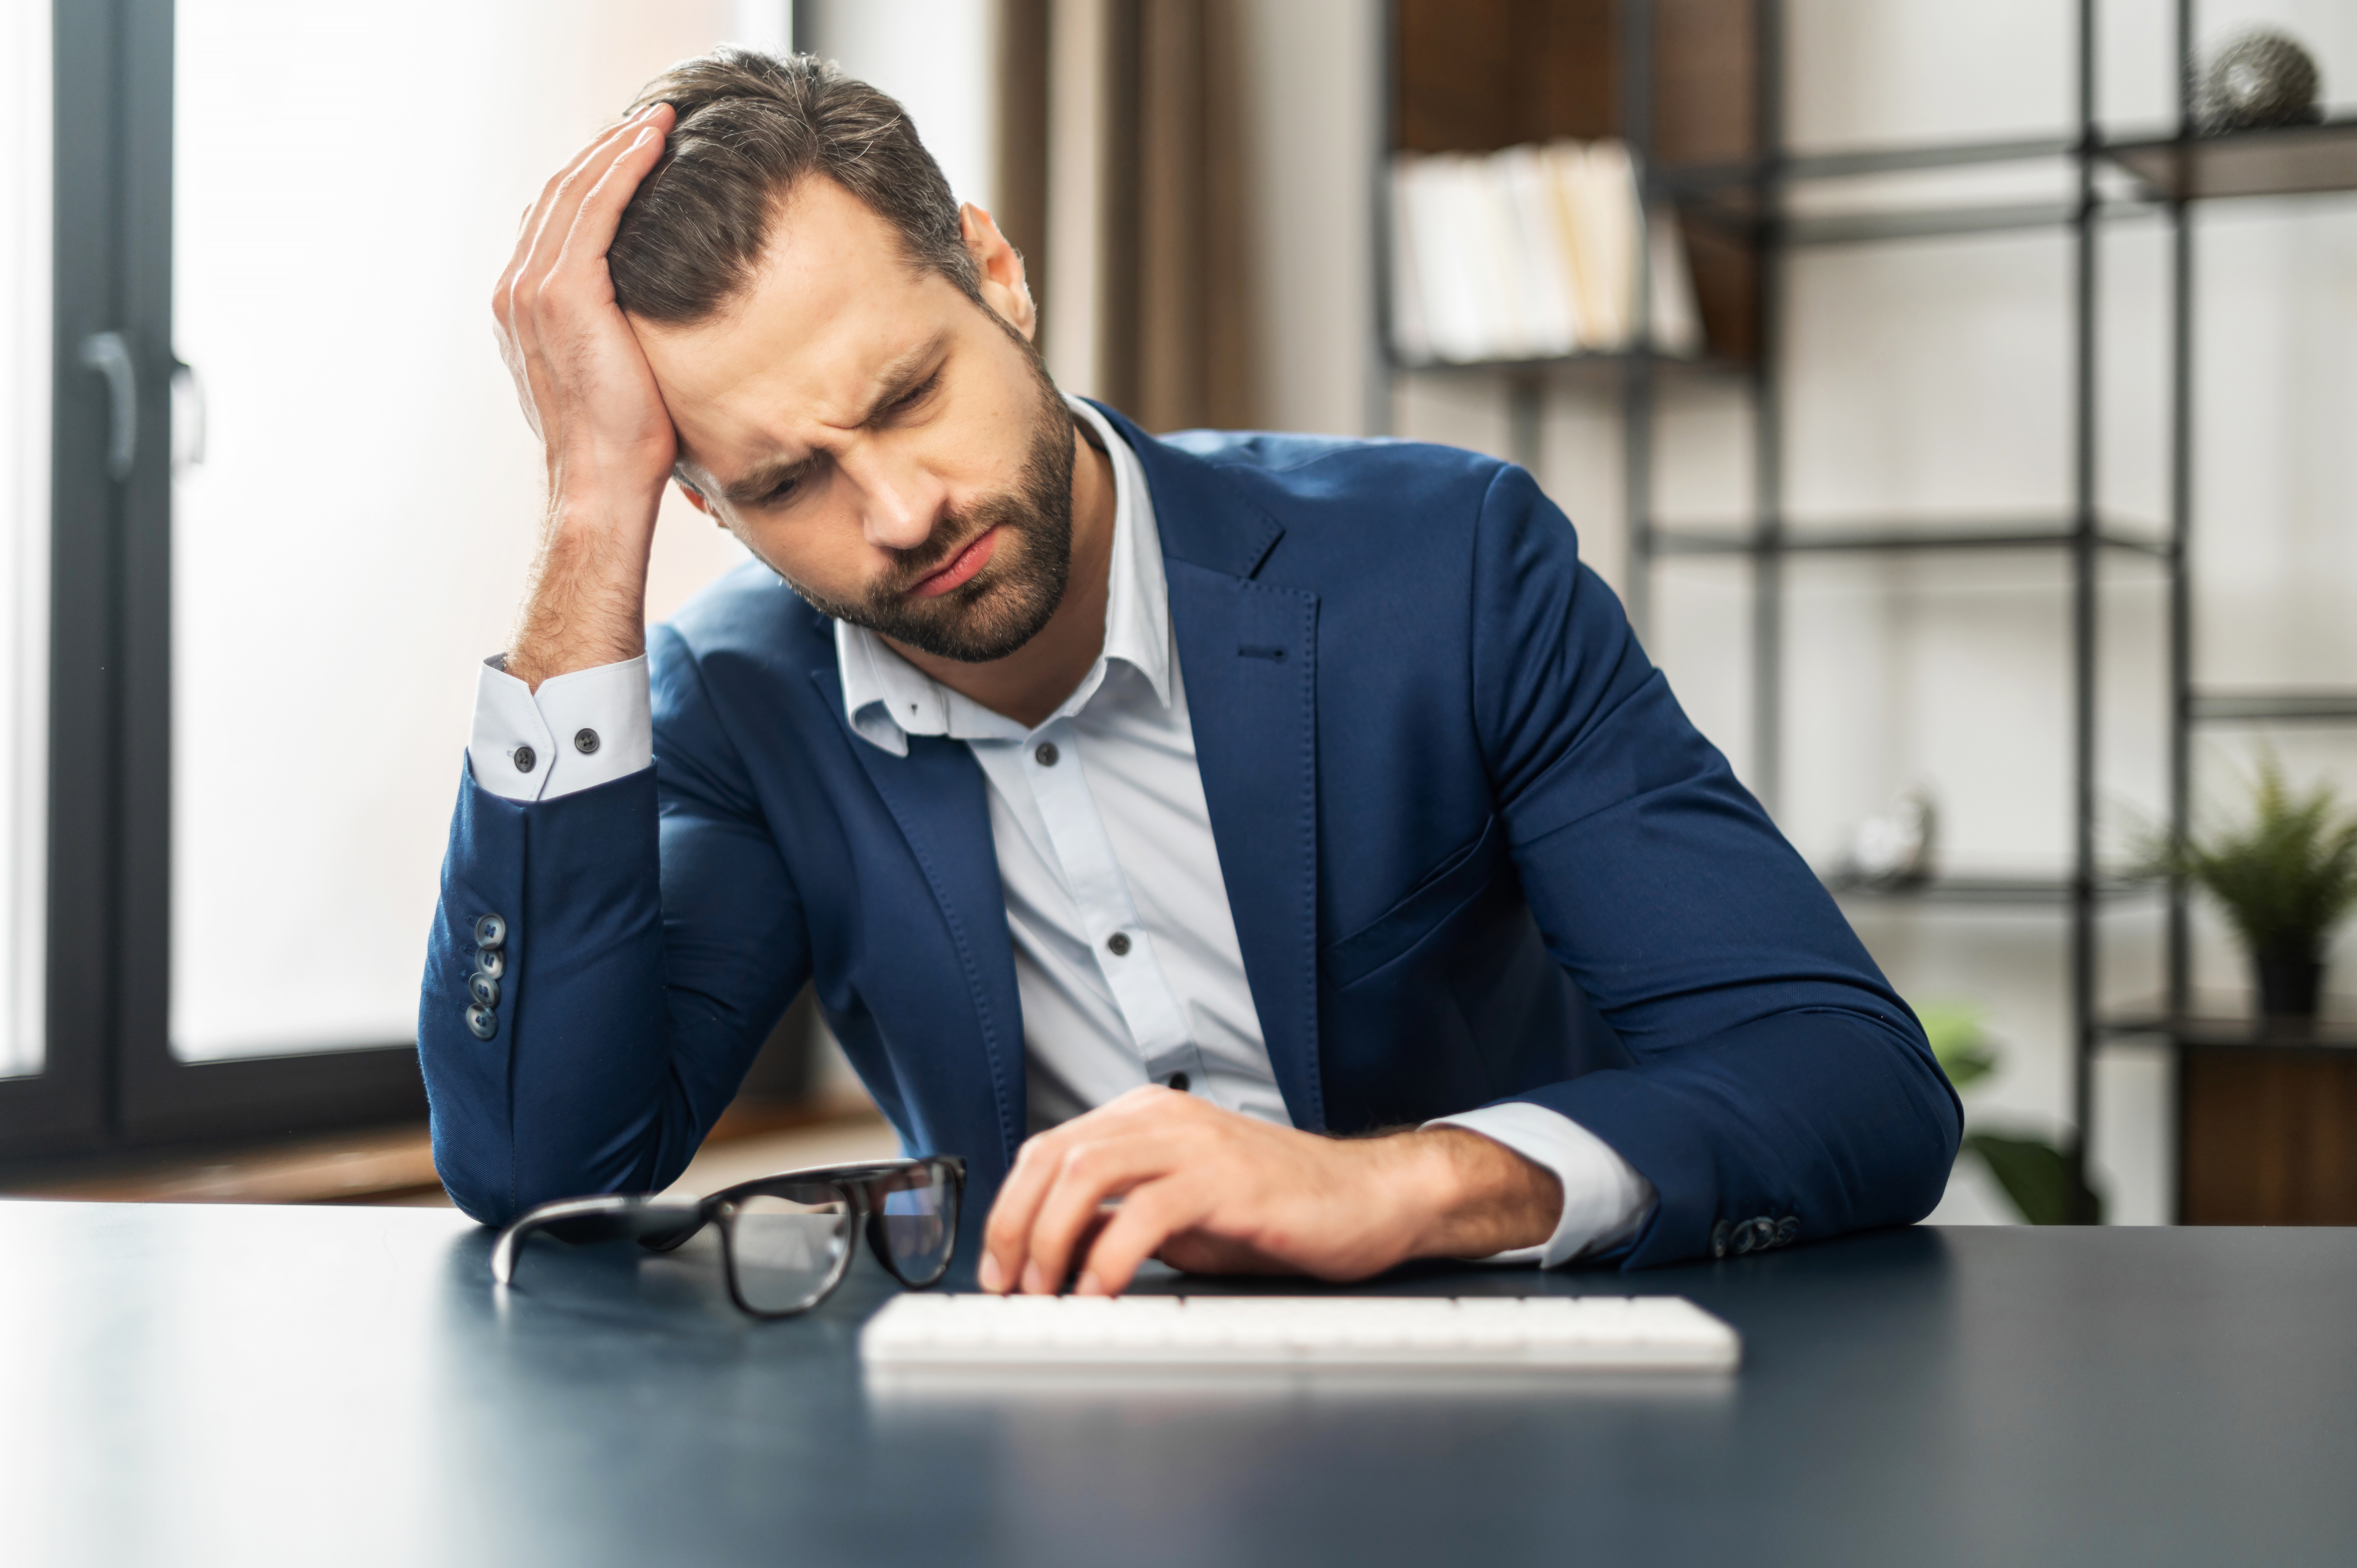 Man stressed at work | Source: Shutterstock